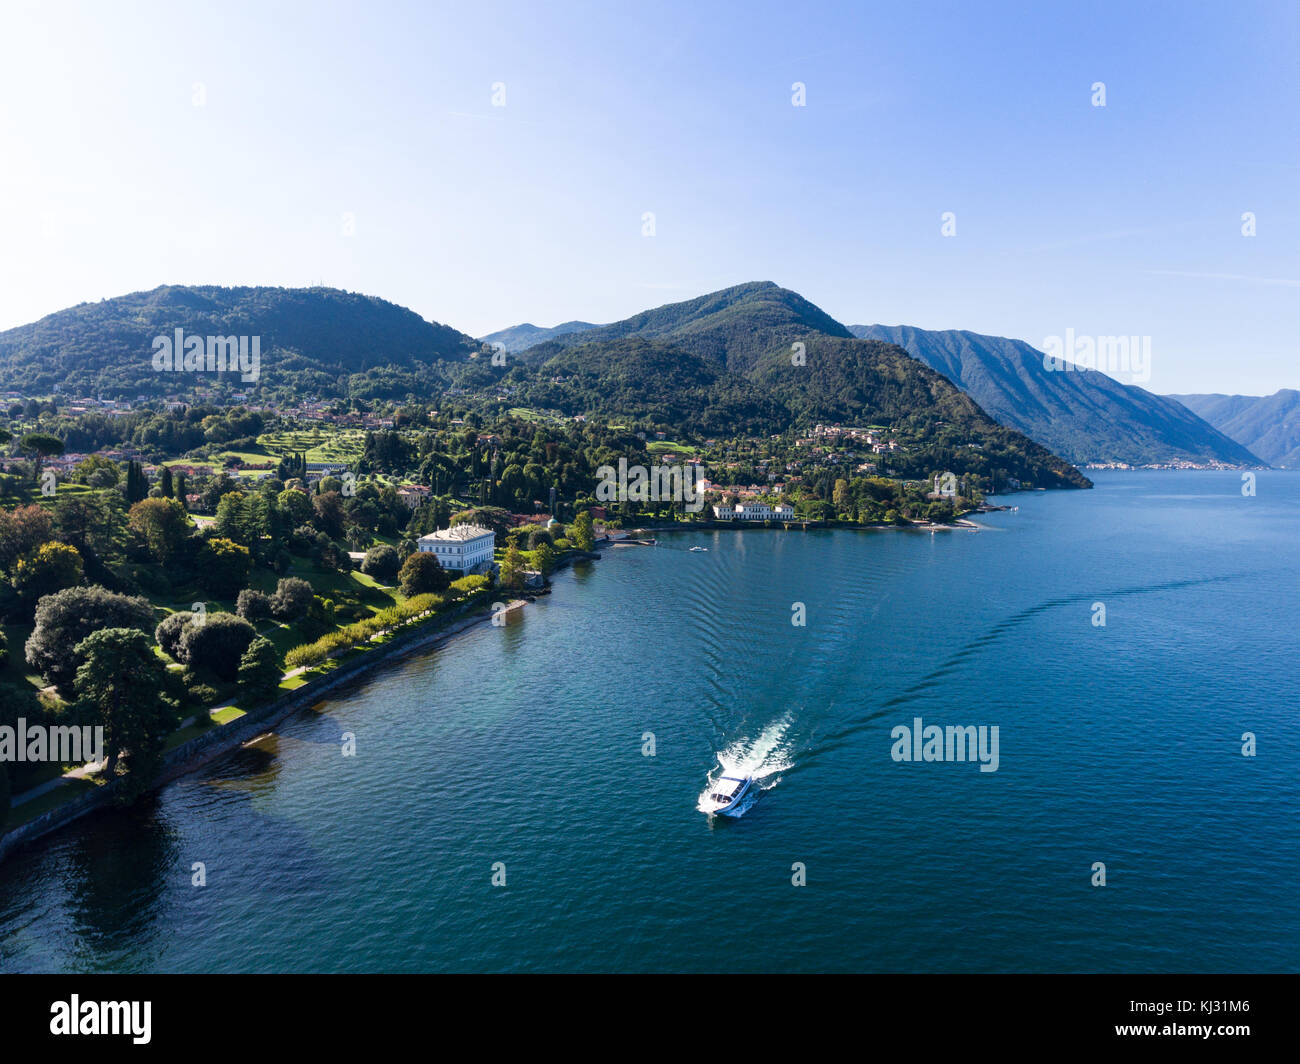 Boat and luxury home on Como lake in Italy, Villa Melzi - Bellagio Stock Photo